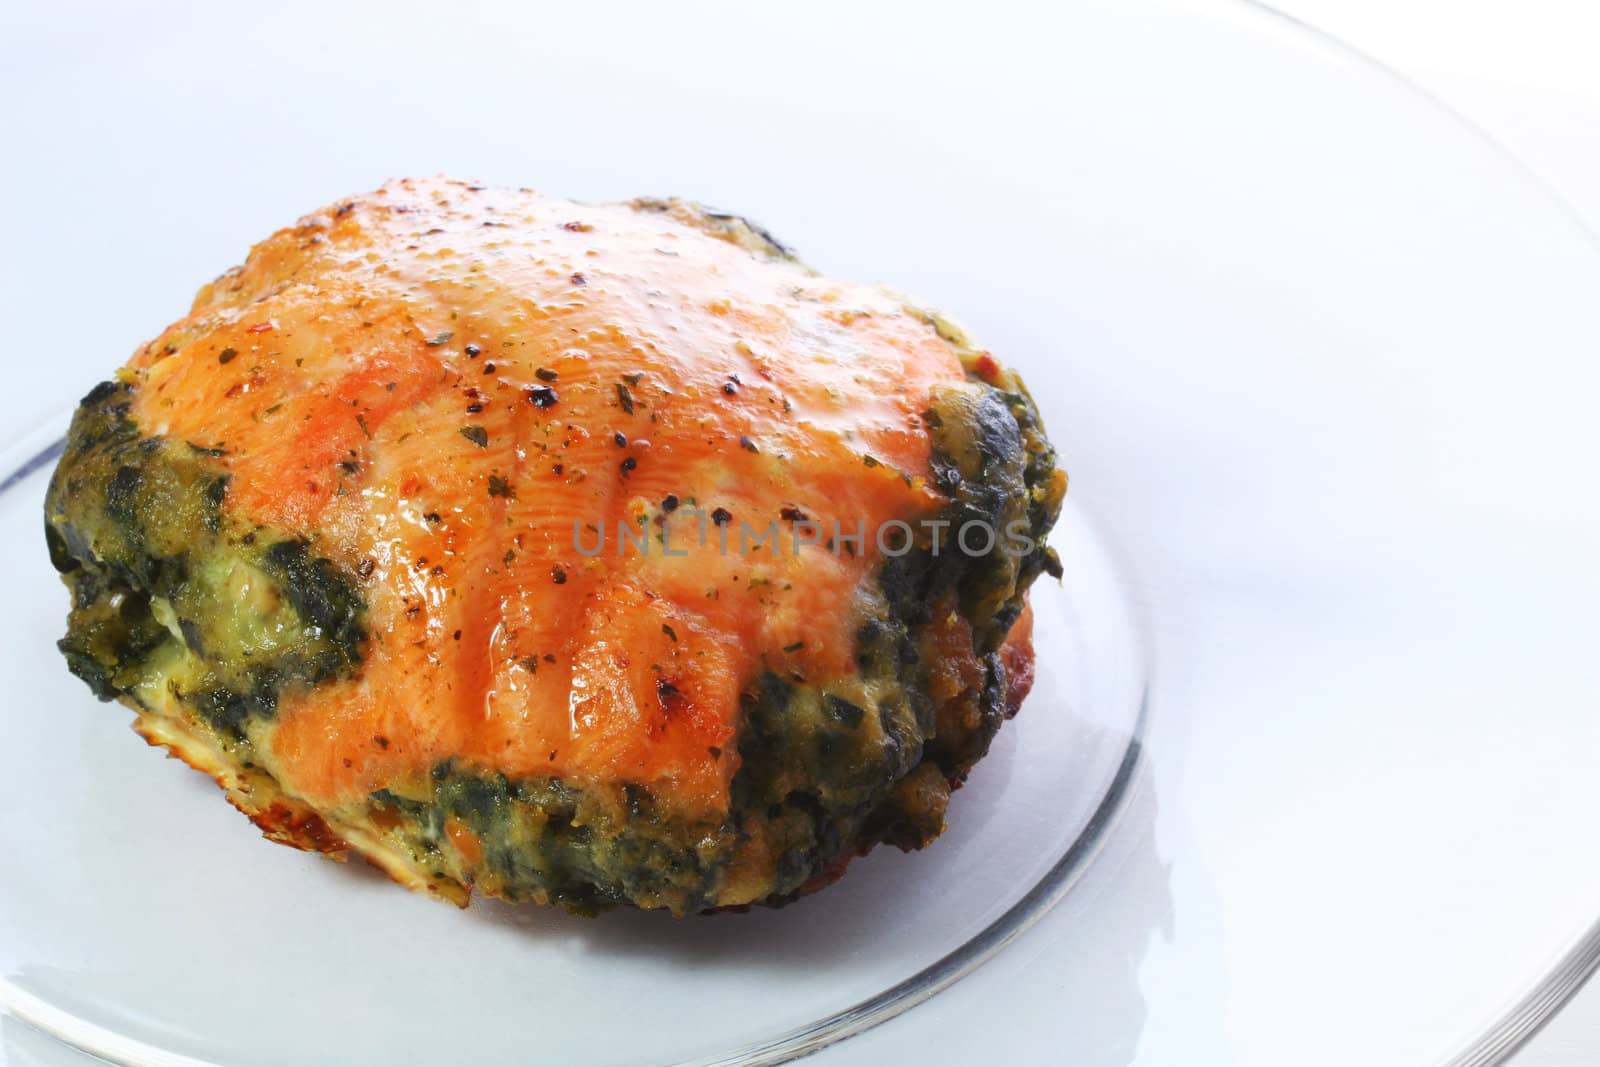 Stuffed salmon by Geoarts